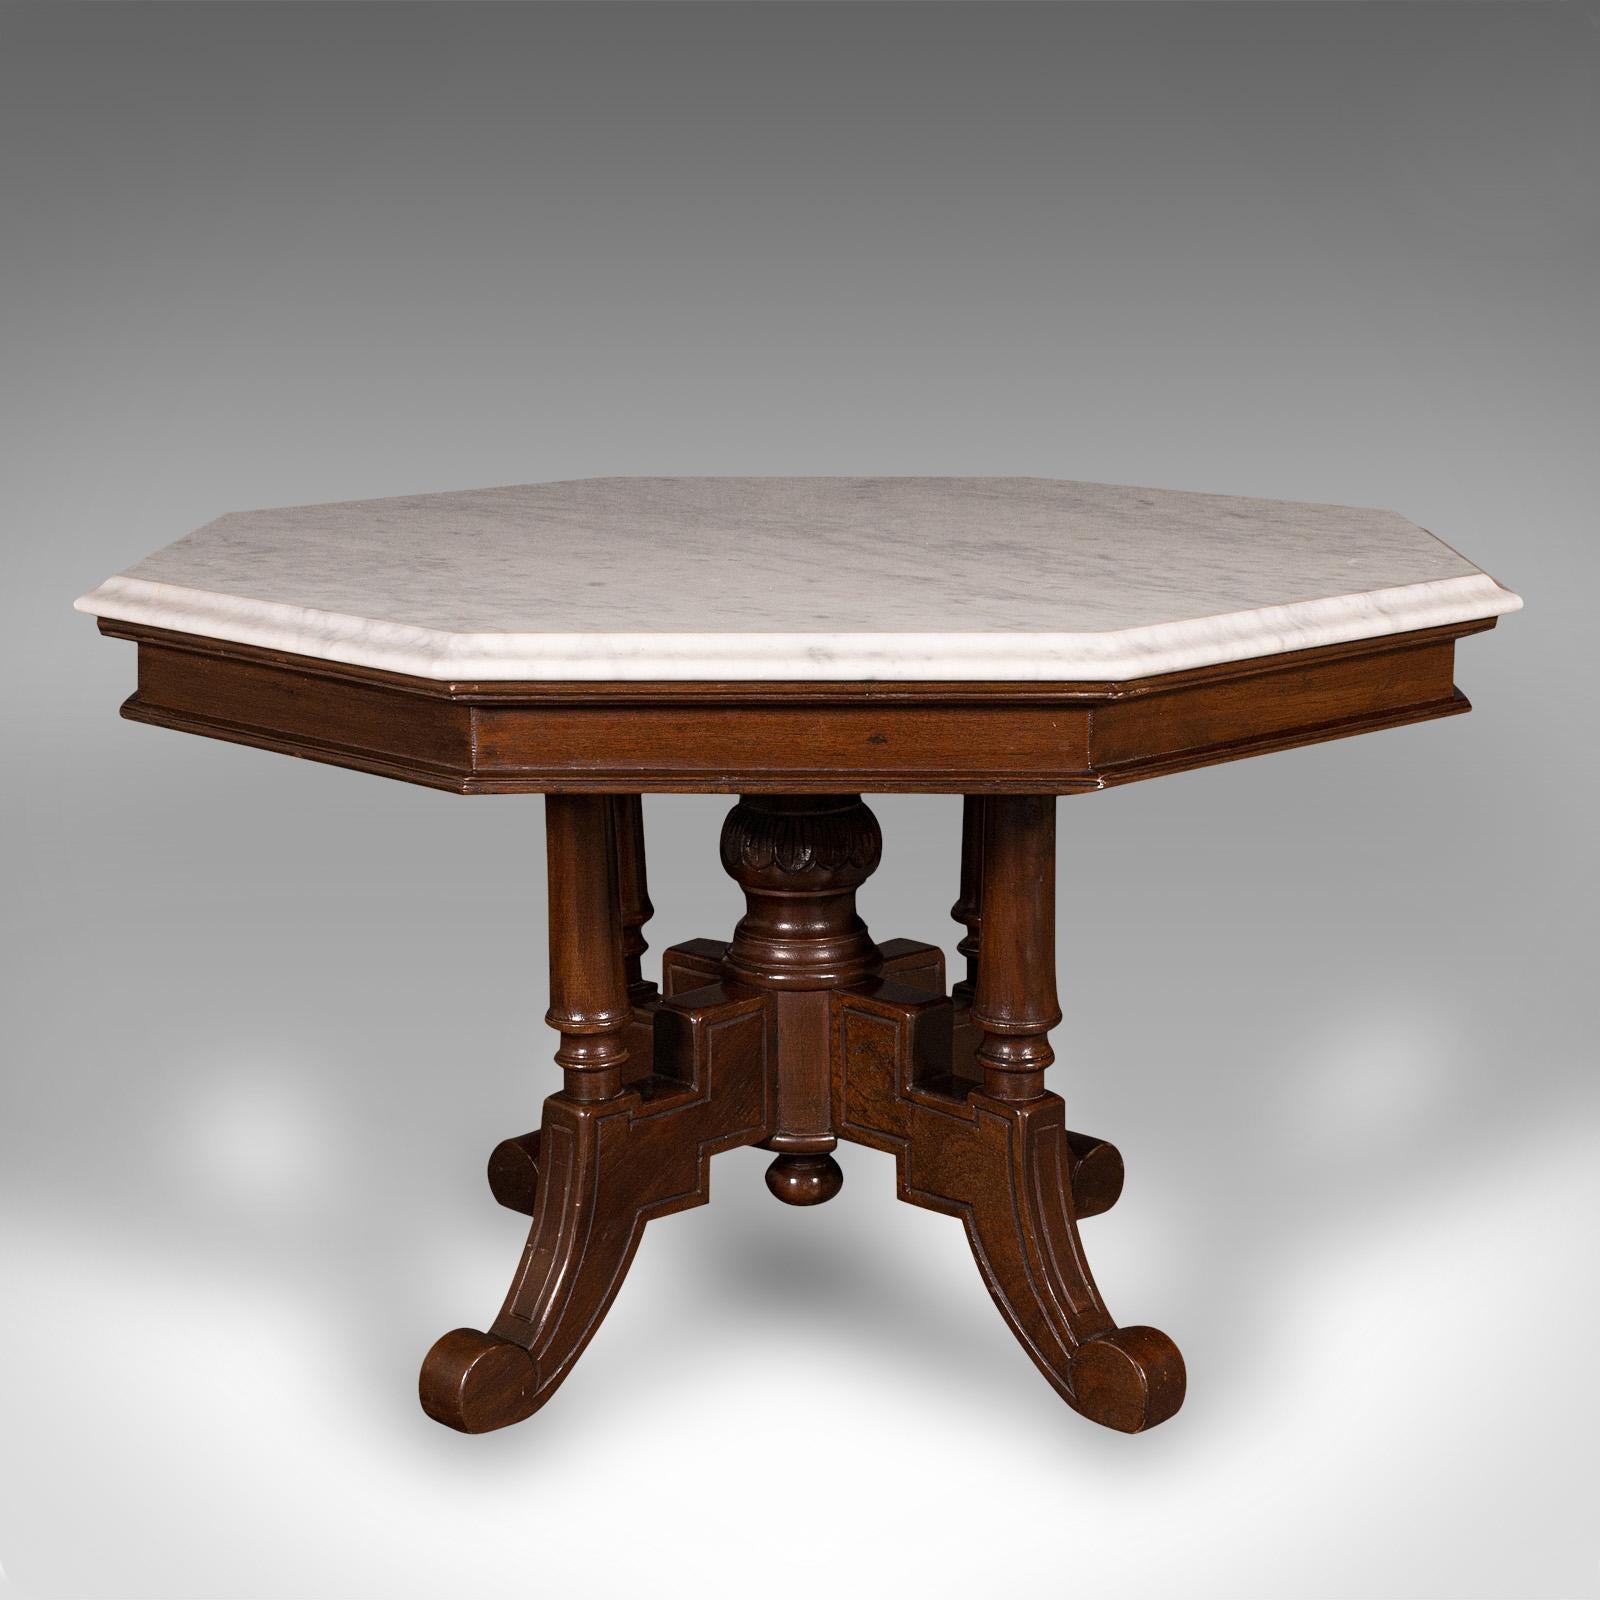 British Antique Octagonal Coffee Table, English, Carrara Marble, Decorative, Victorian For Sale